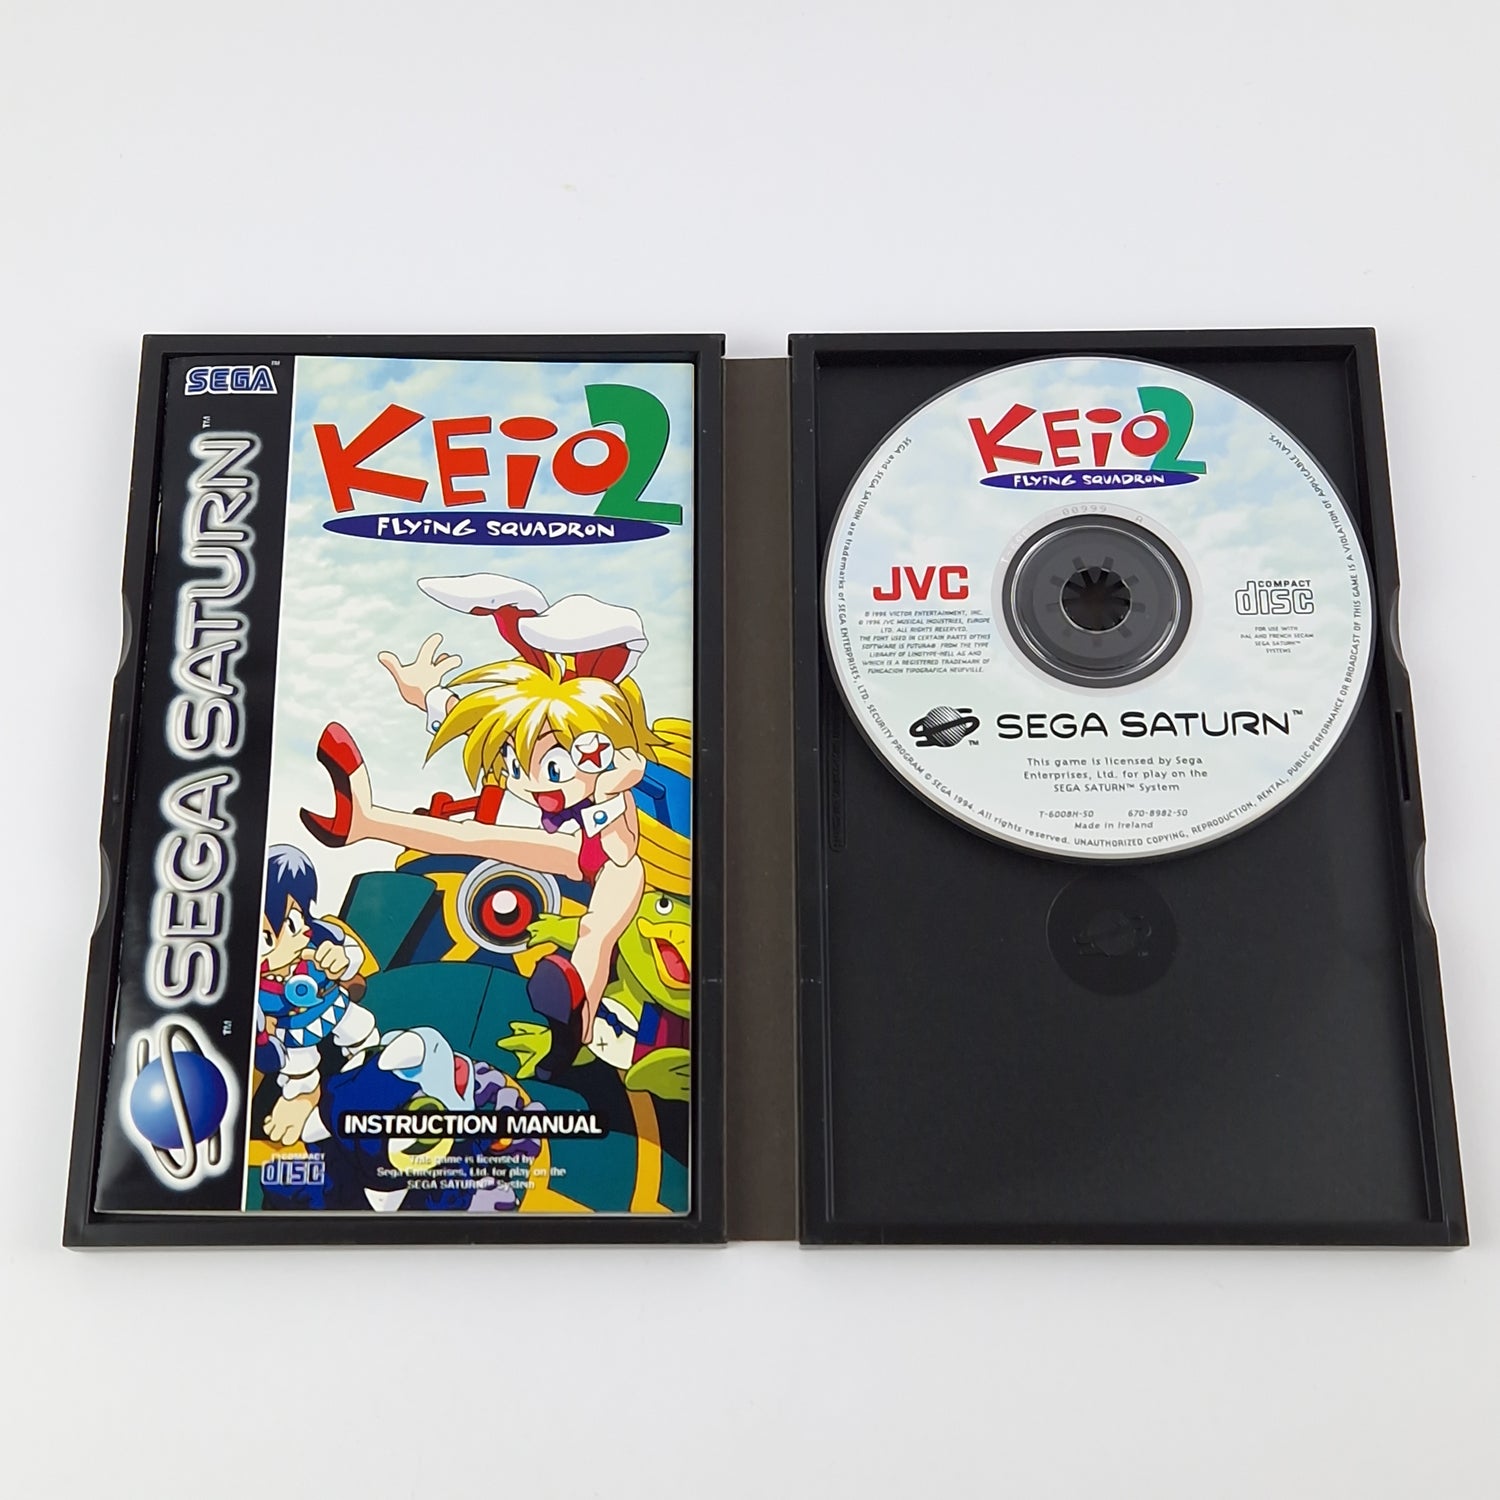 Sega Saturn Game: Keio 2 Flying Squadron - OVP & Manual PAL | Disk system